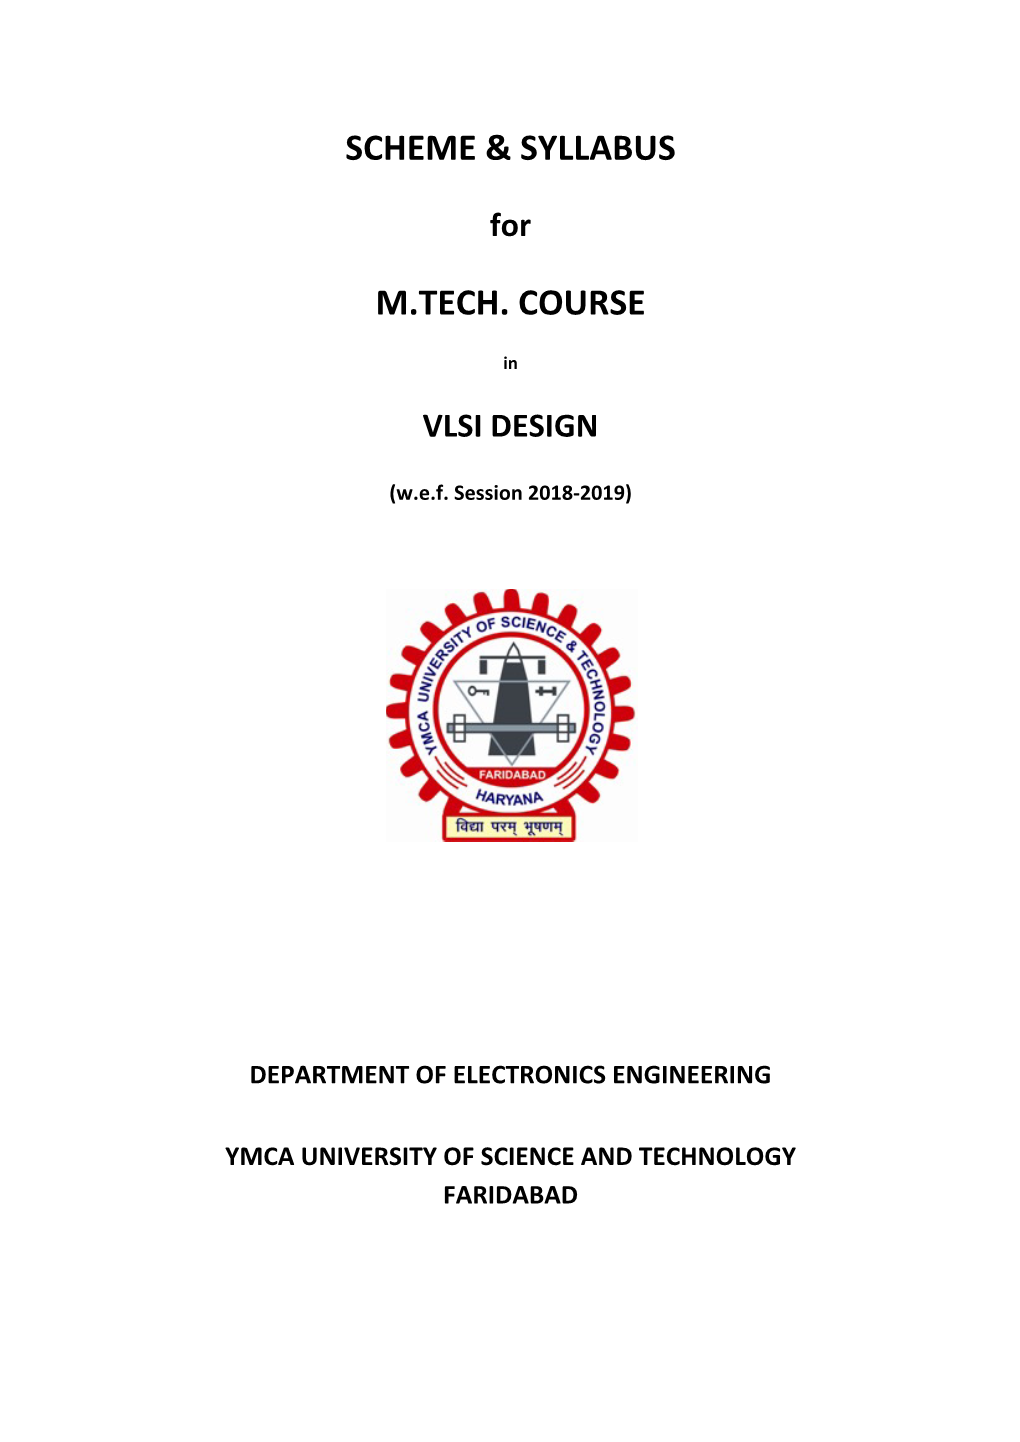 Scheme & Syllabus M.Tech. Course